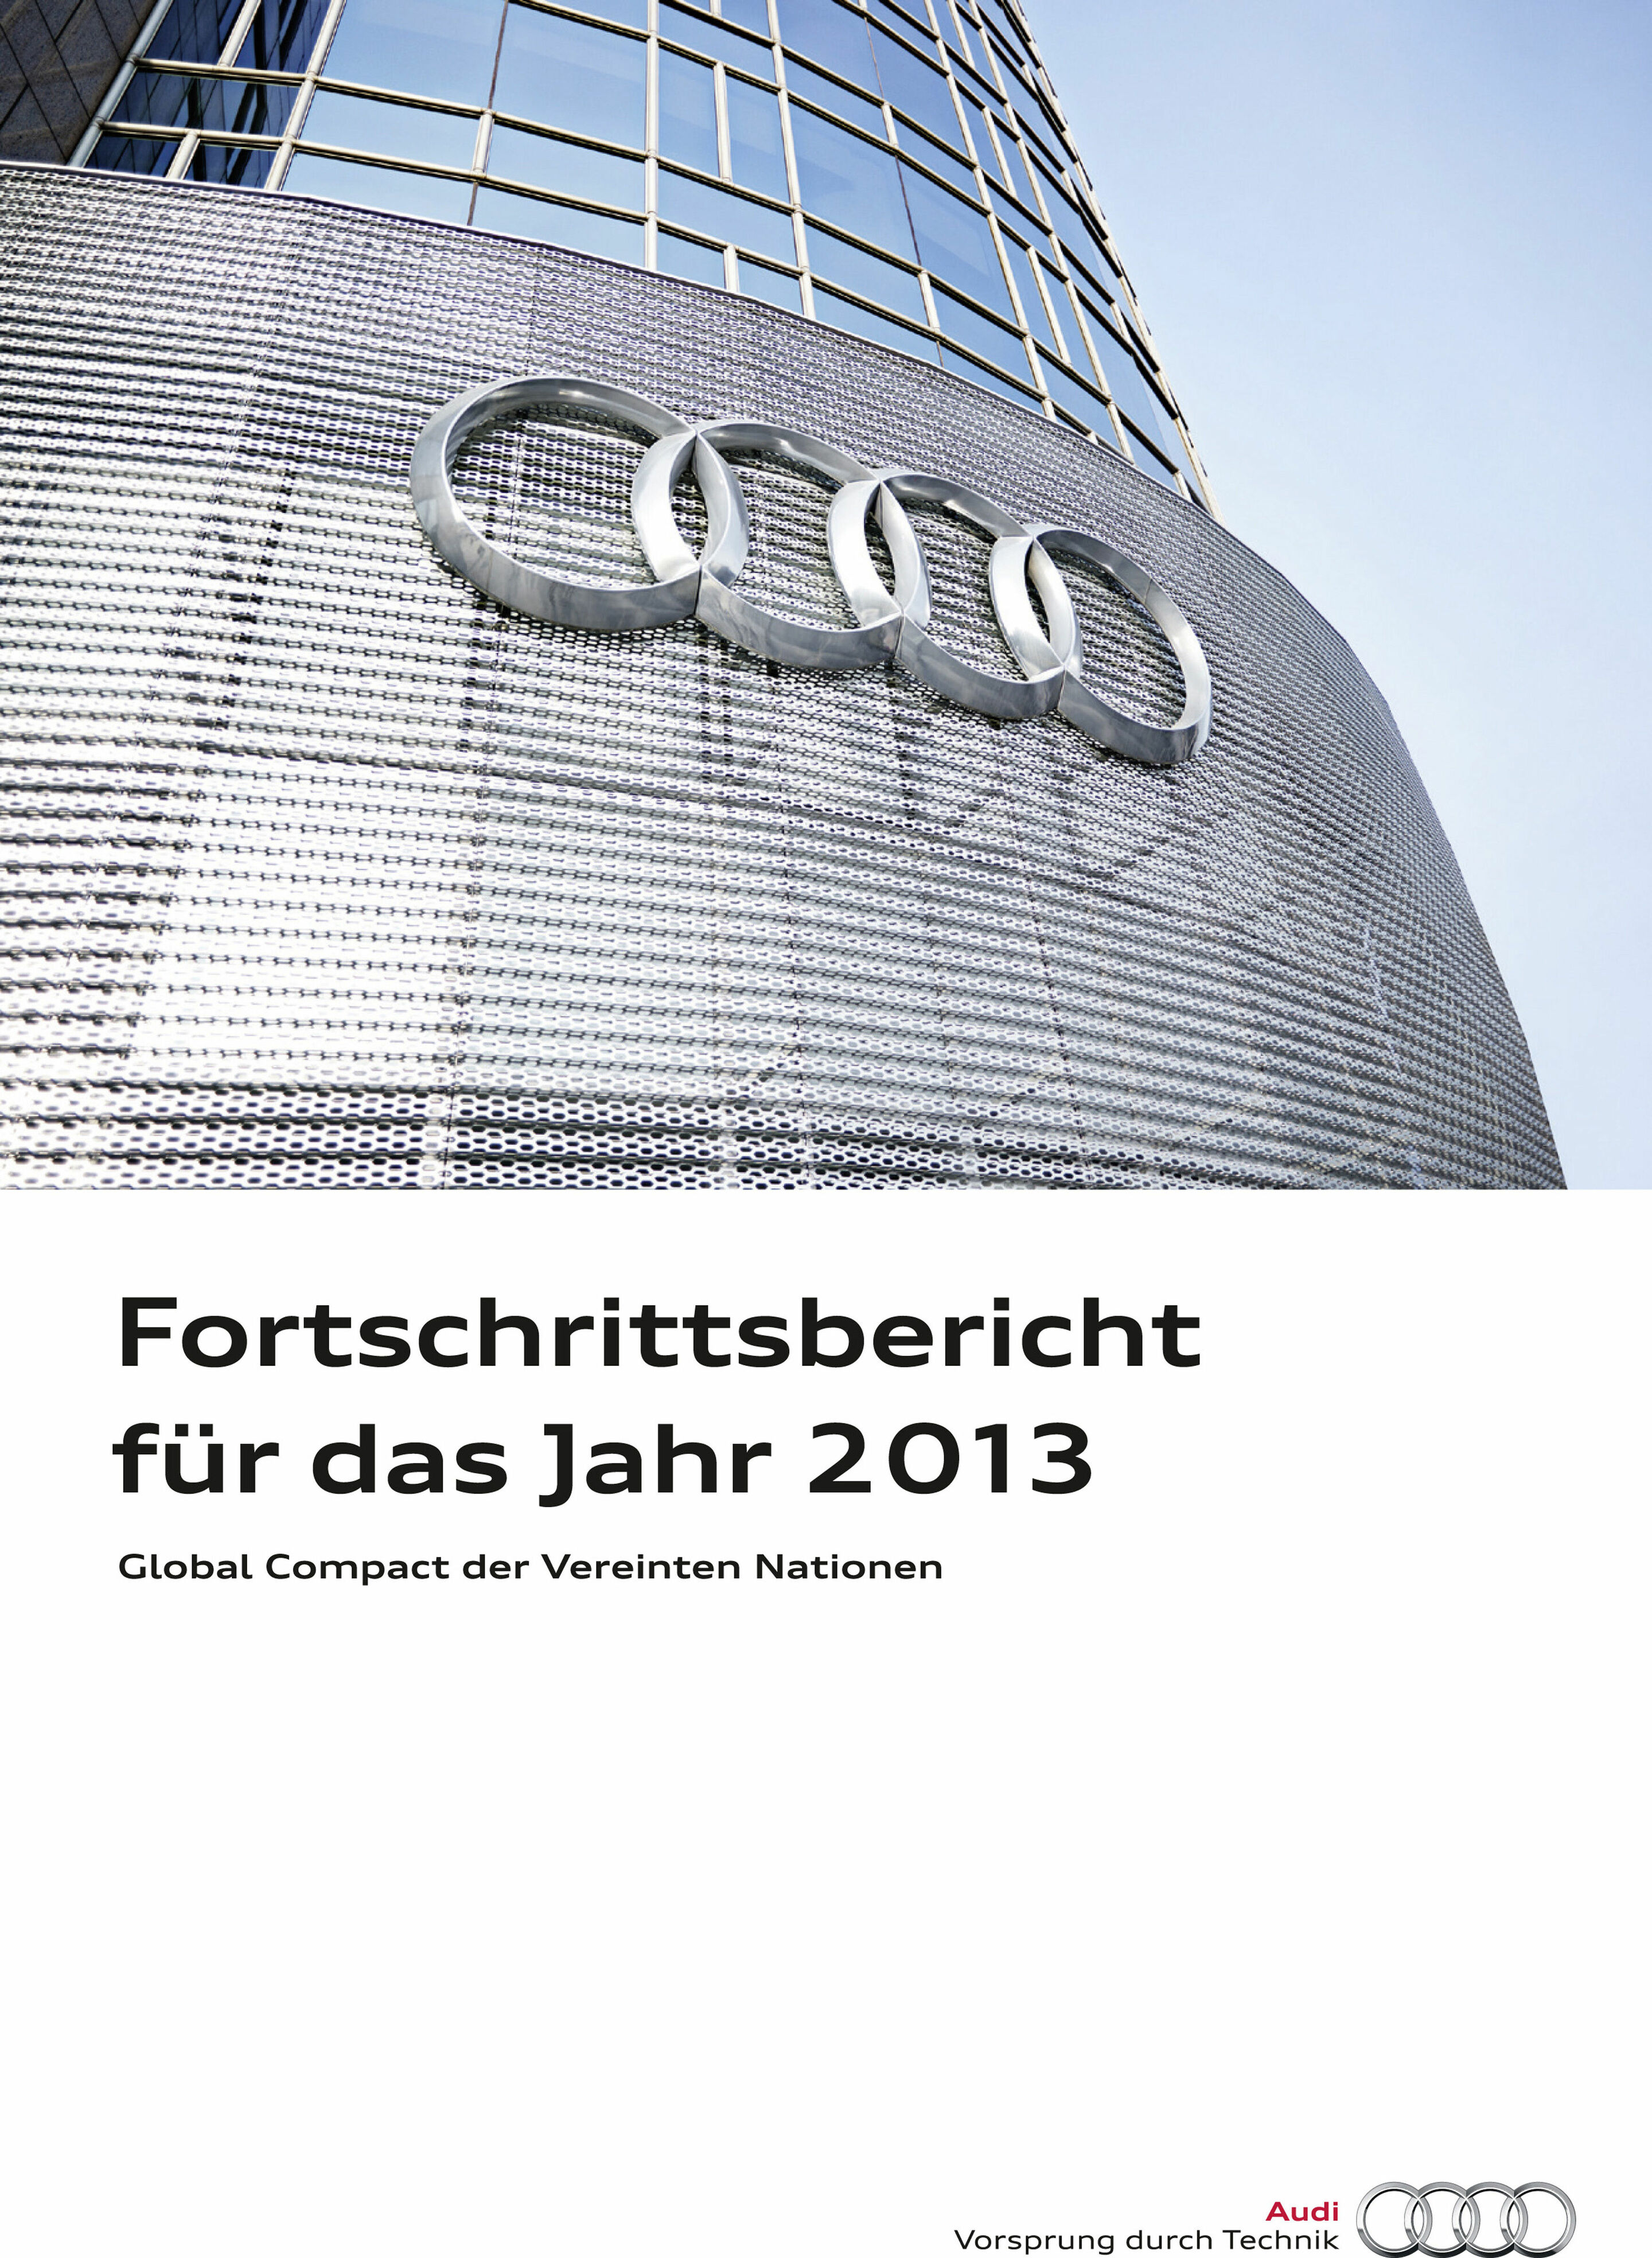 Audi aktualisiert Corporate Responsibility Report: